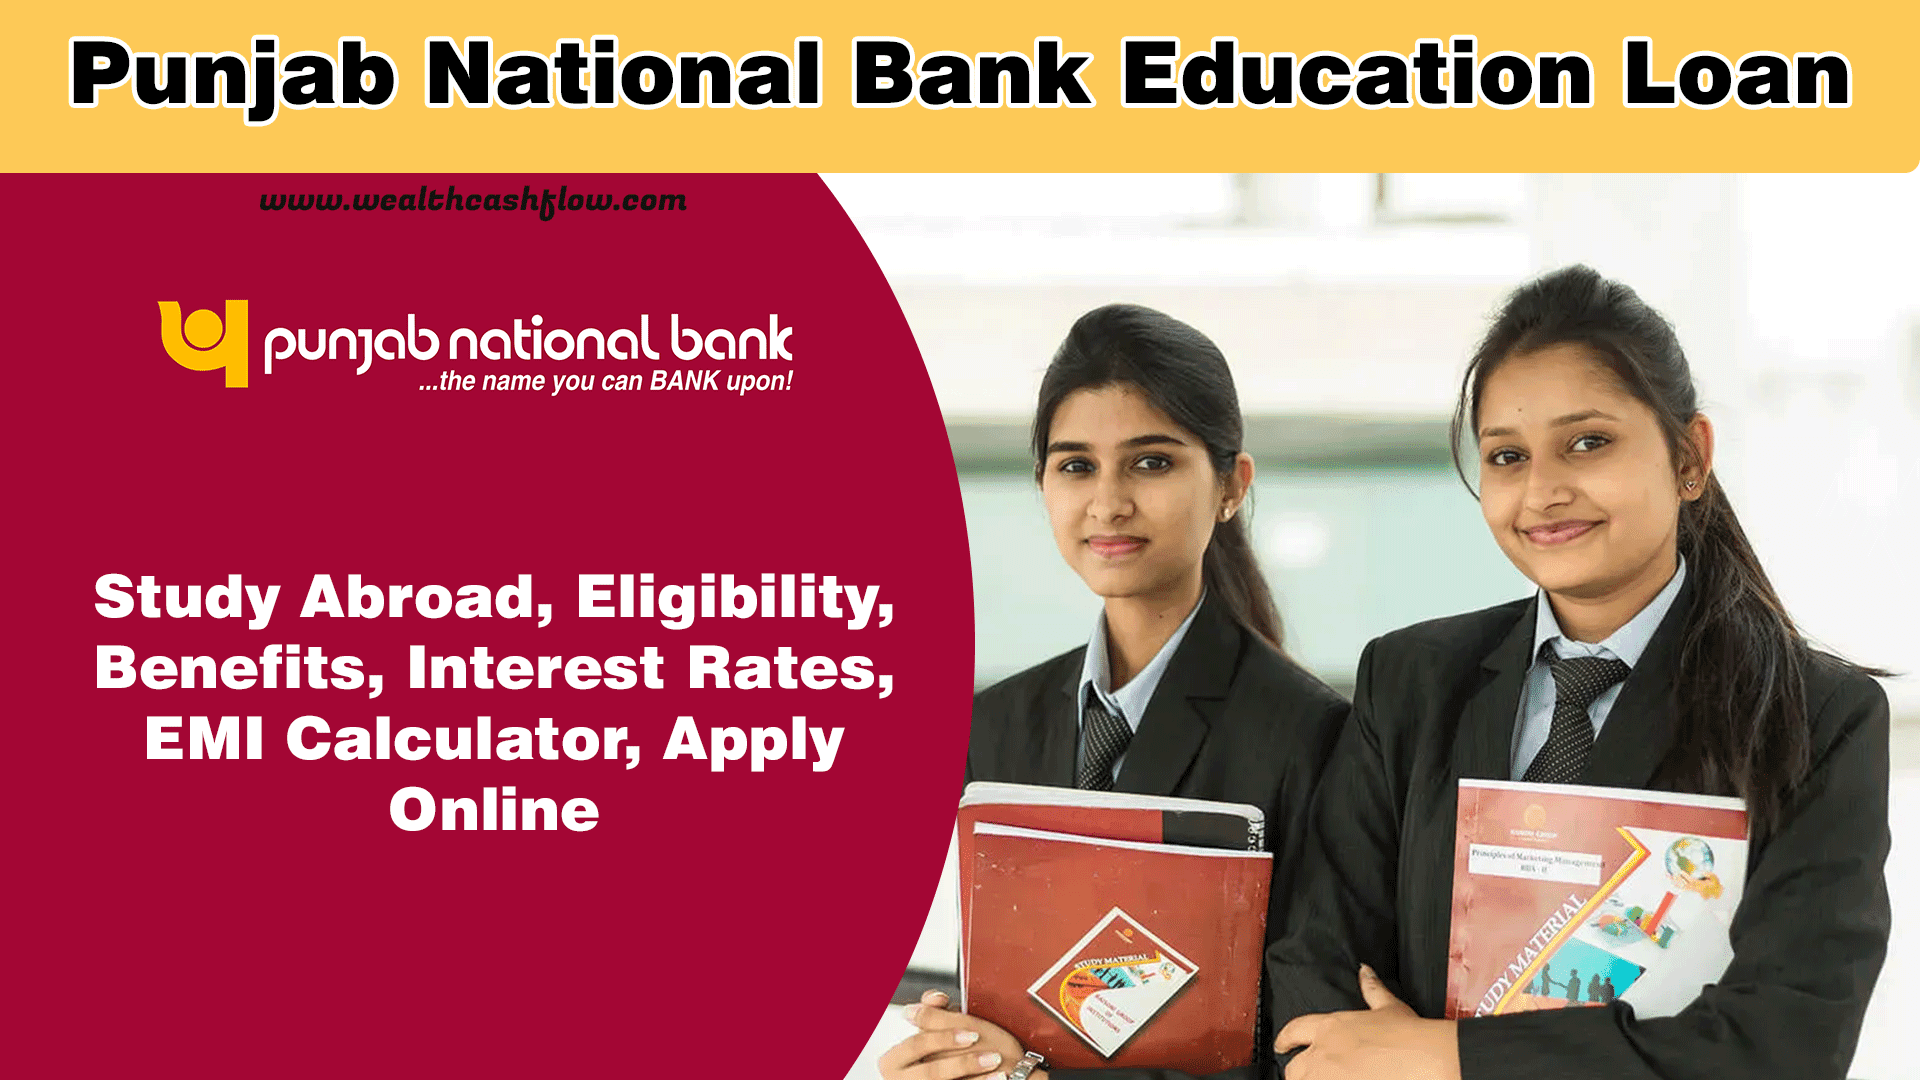 Punjab National Bank Education Loan : Study Abroad, Eligibility,Benefits, Interest Rates, EMI Calculator, Apply Online